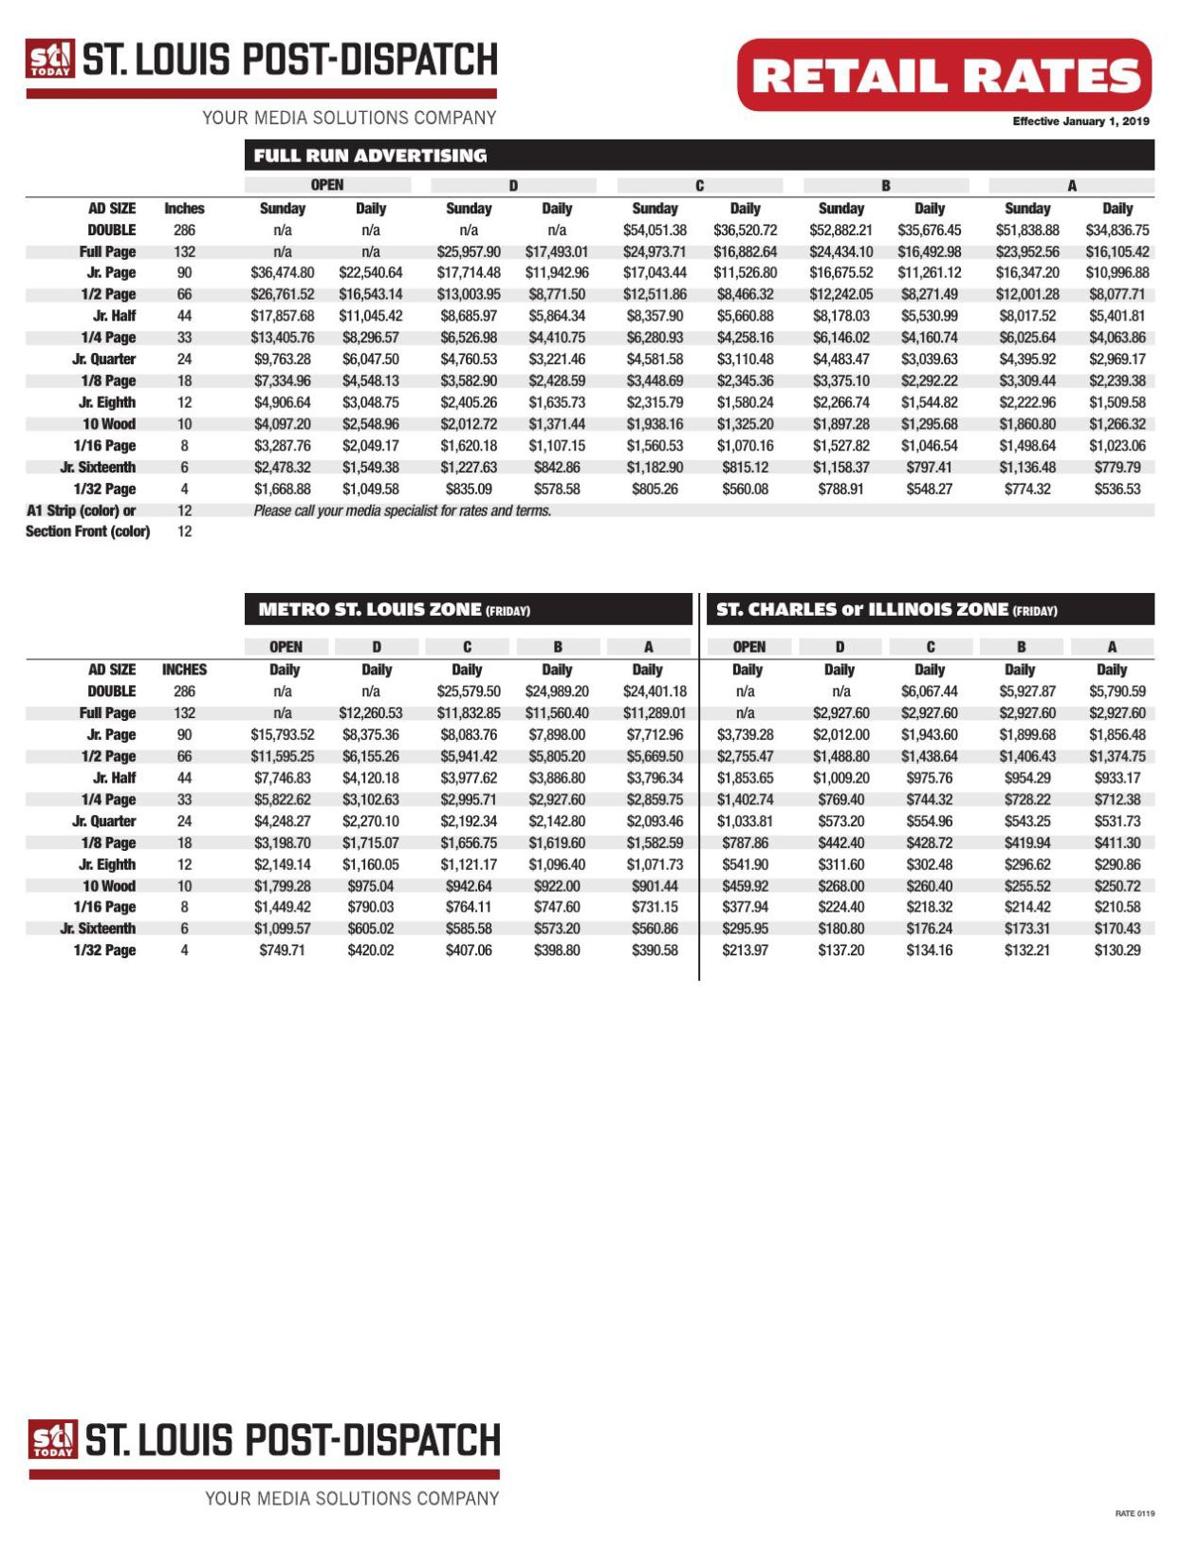 St. Louis Post-Dispatch Retail Rates | Print Media | www.bagsaleusa.com